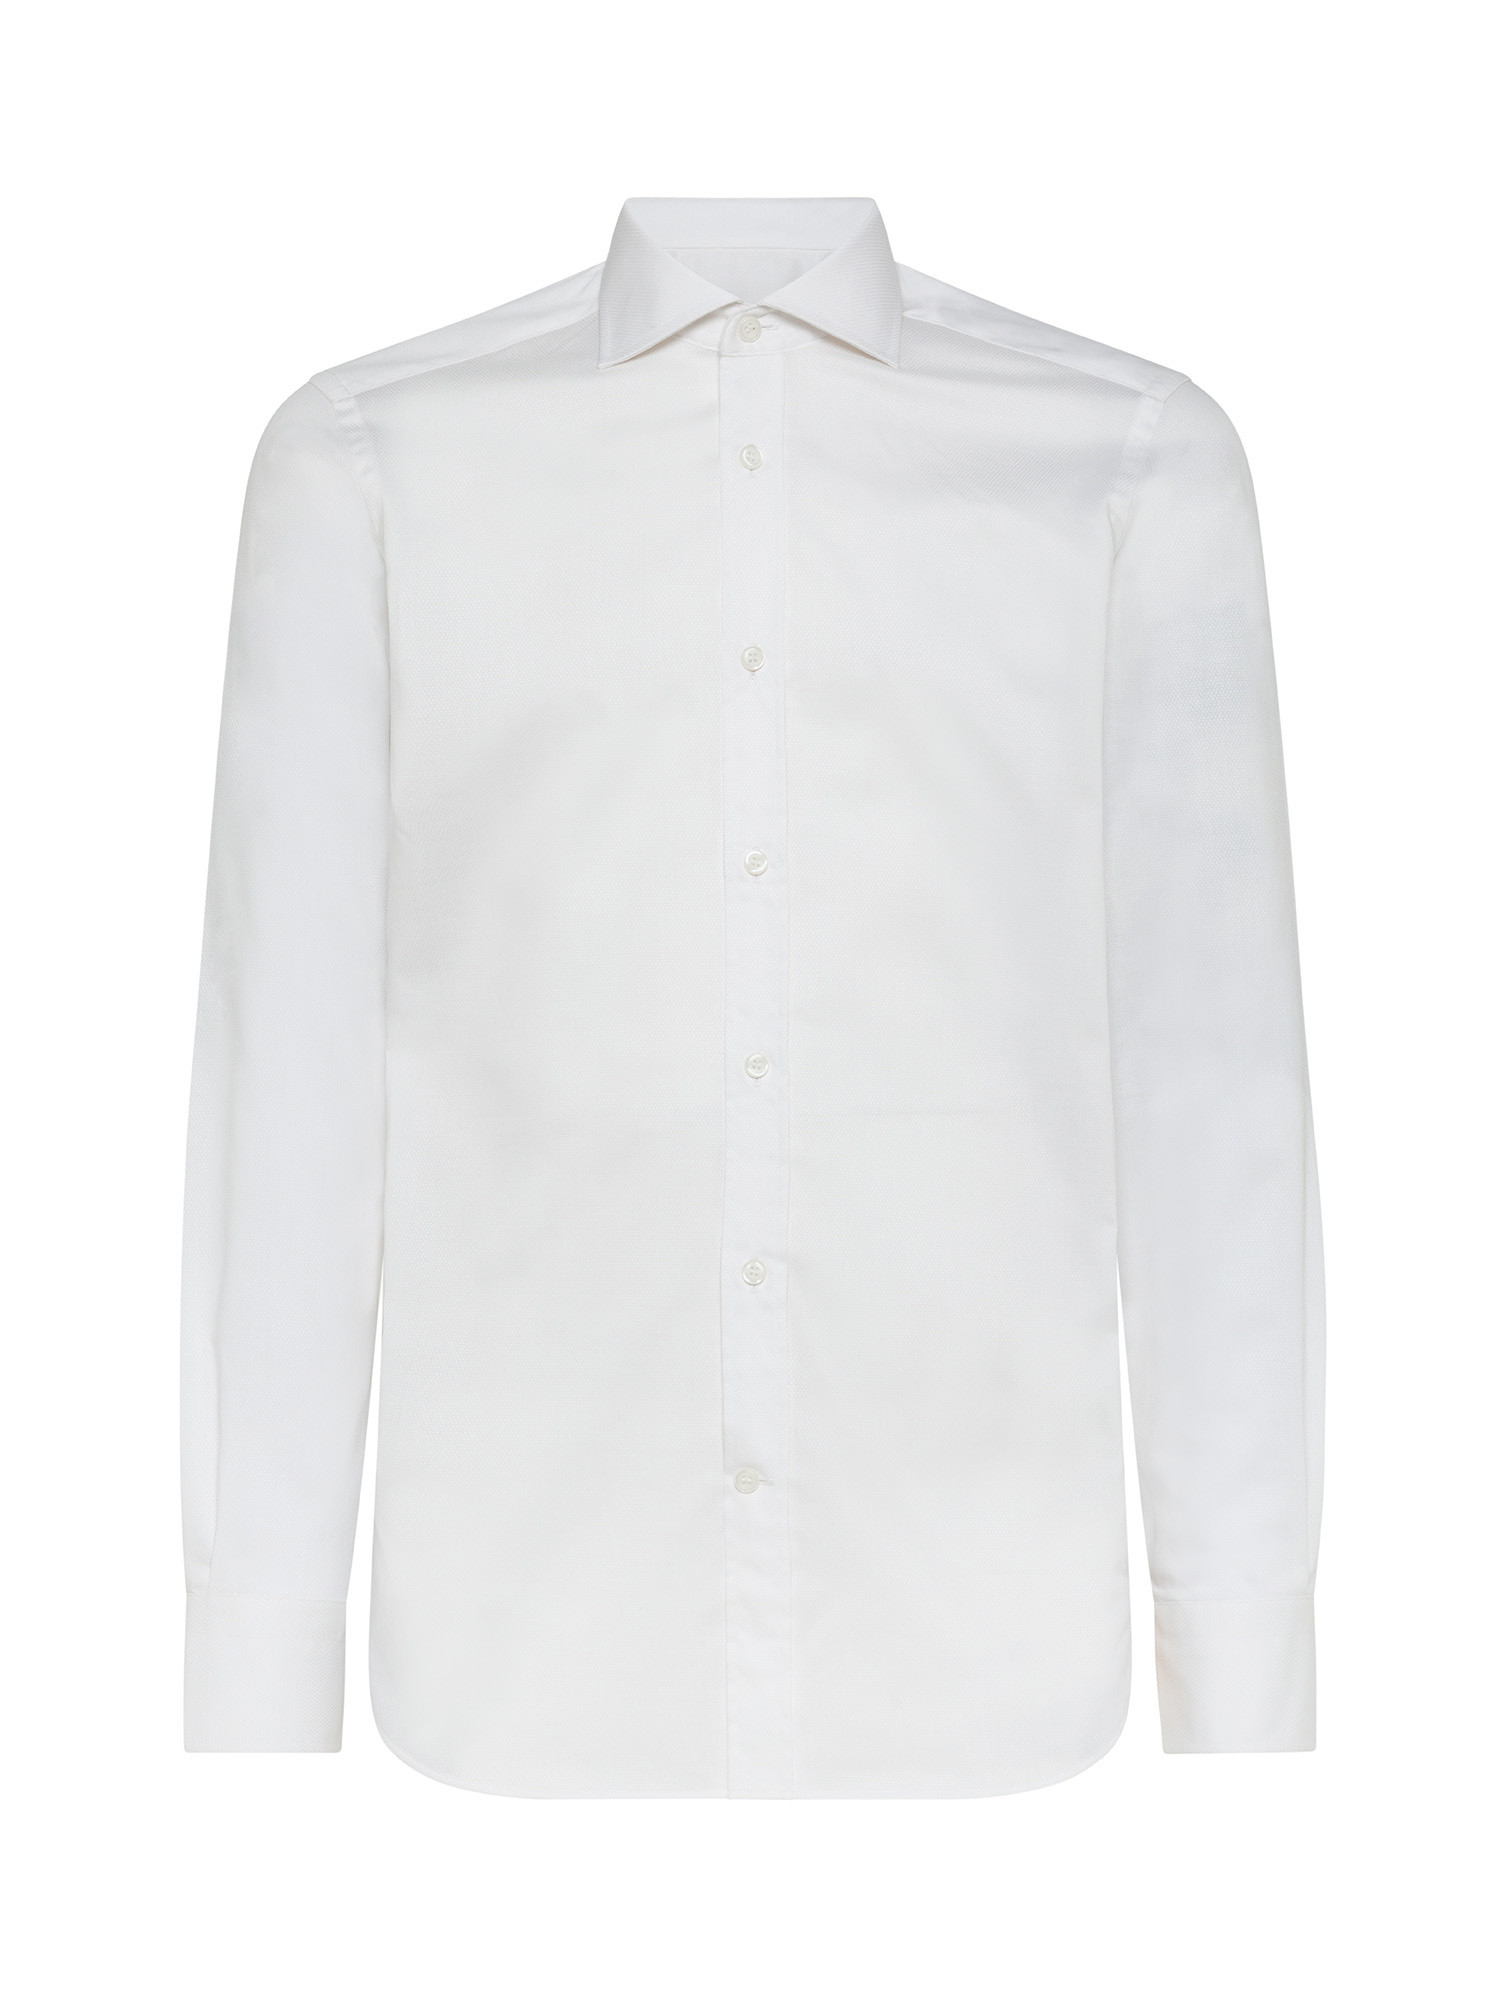 Luca D'Altieri - Camicia slim fit in cotone elasticizzato, Bianco, large image number 0